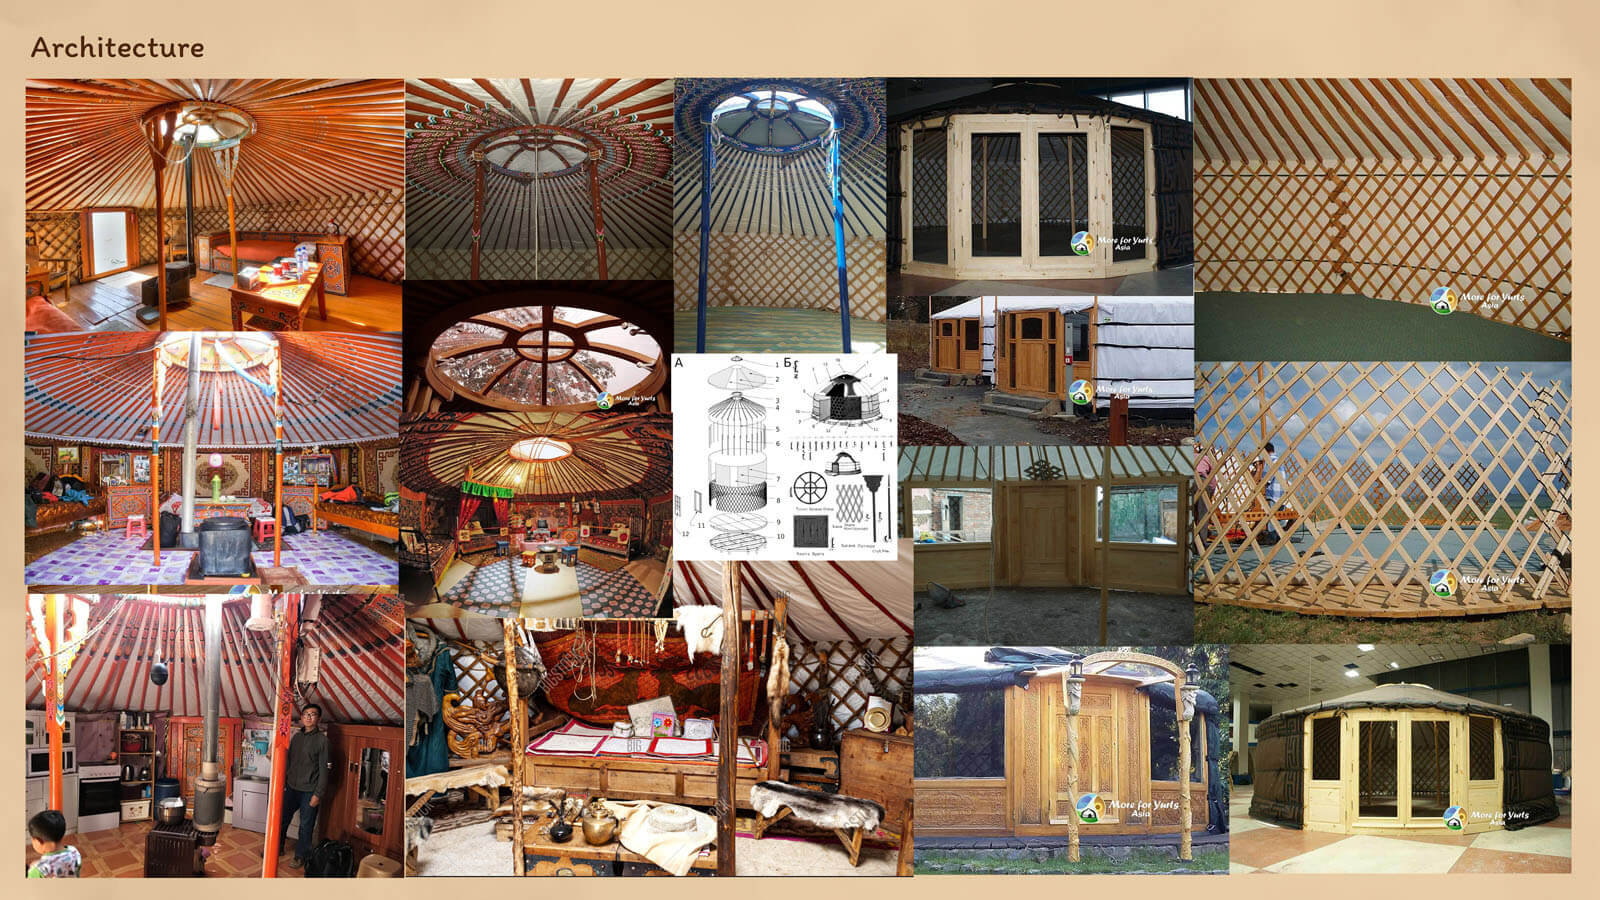 A collage of various yurt interiors depicting lattice work